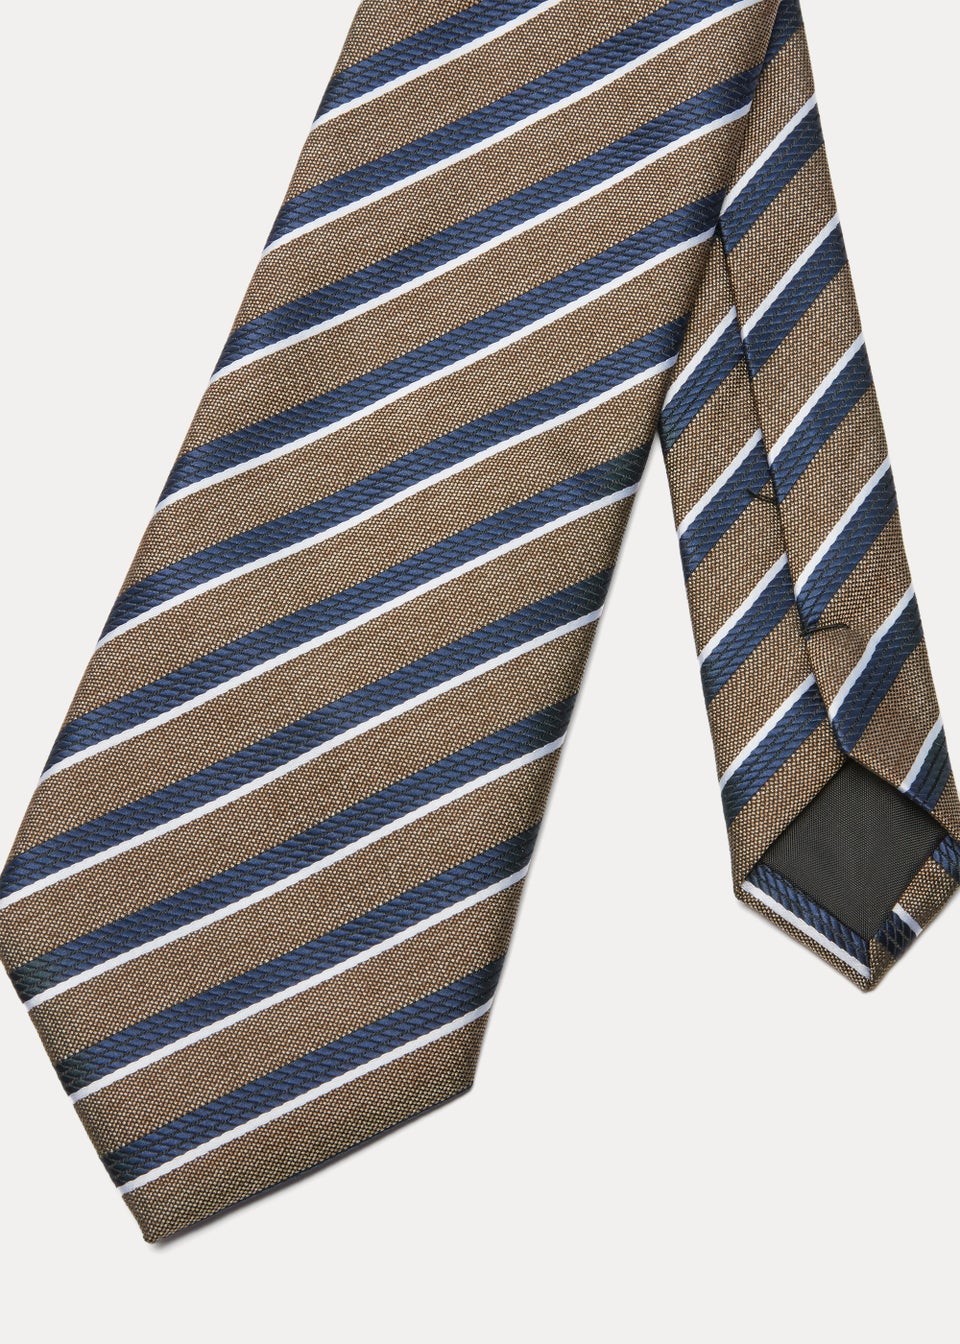 Taylor & Wright Stone Stripe Tie